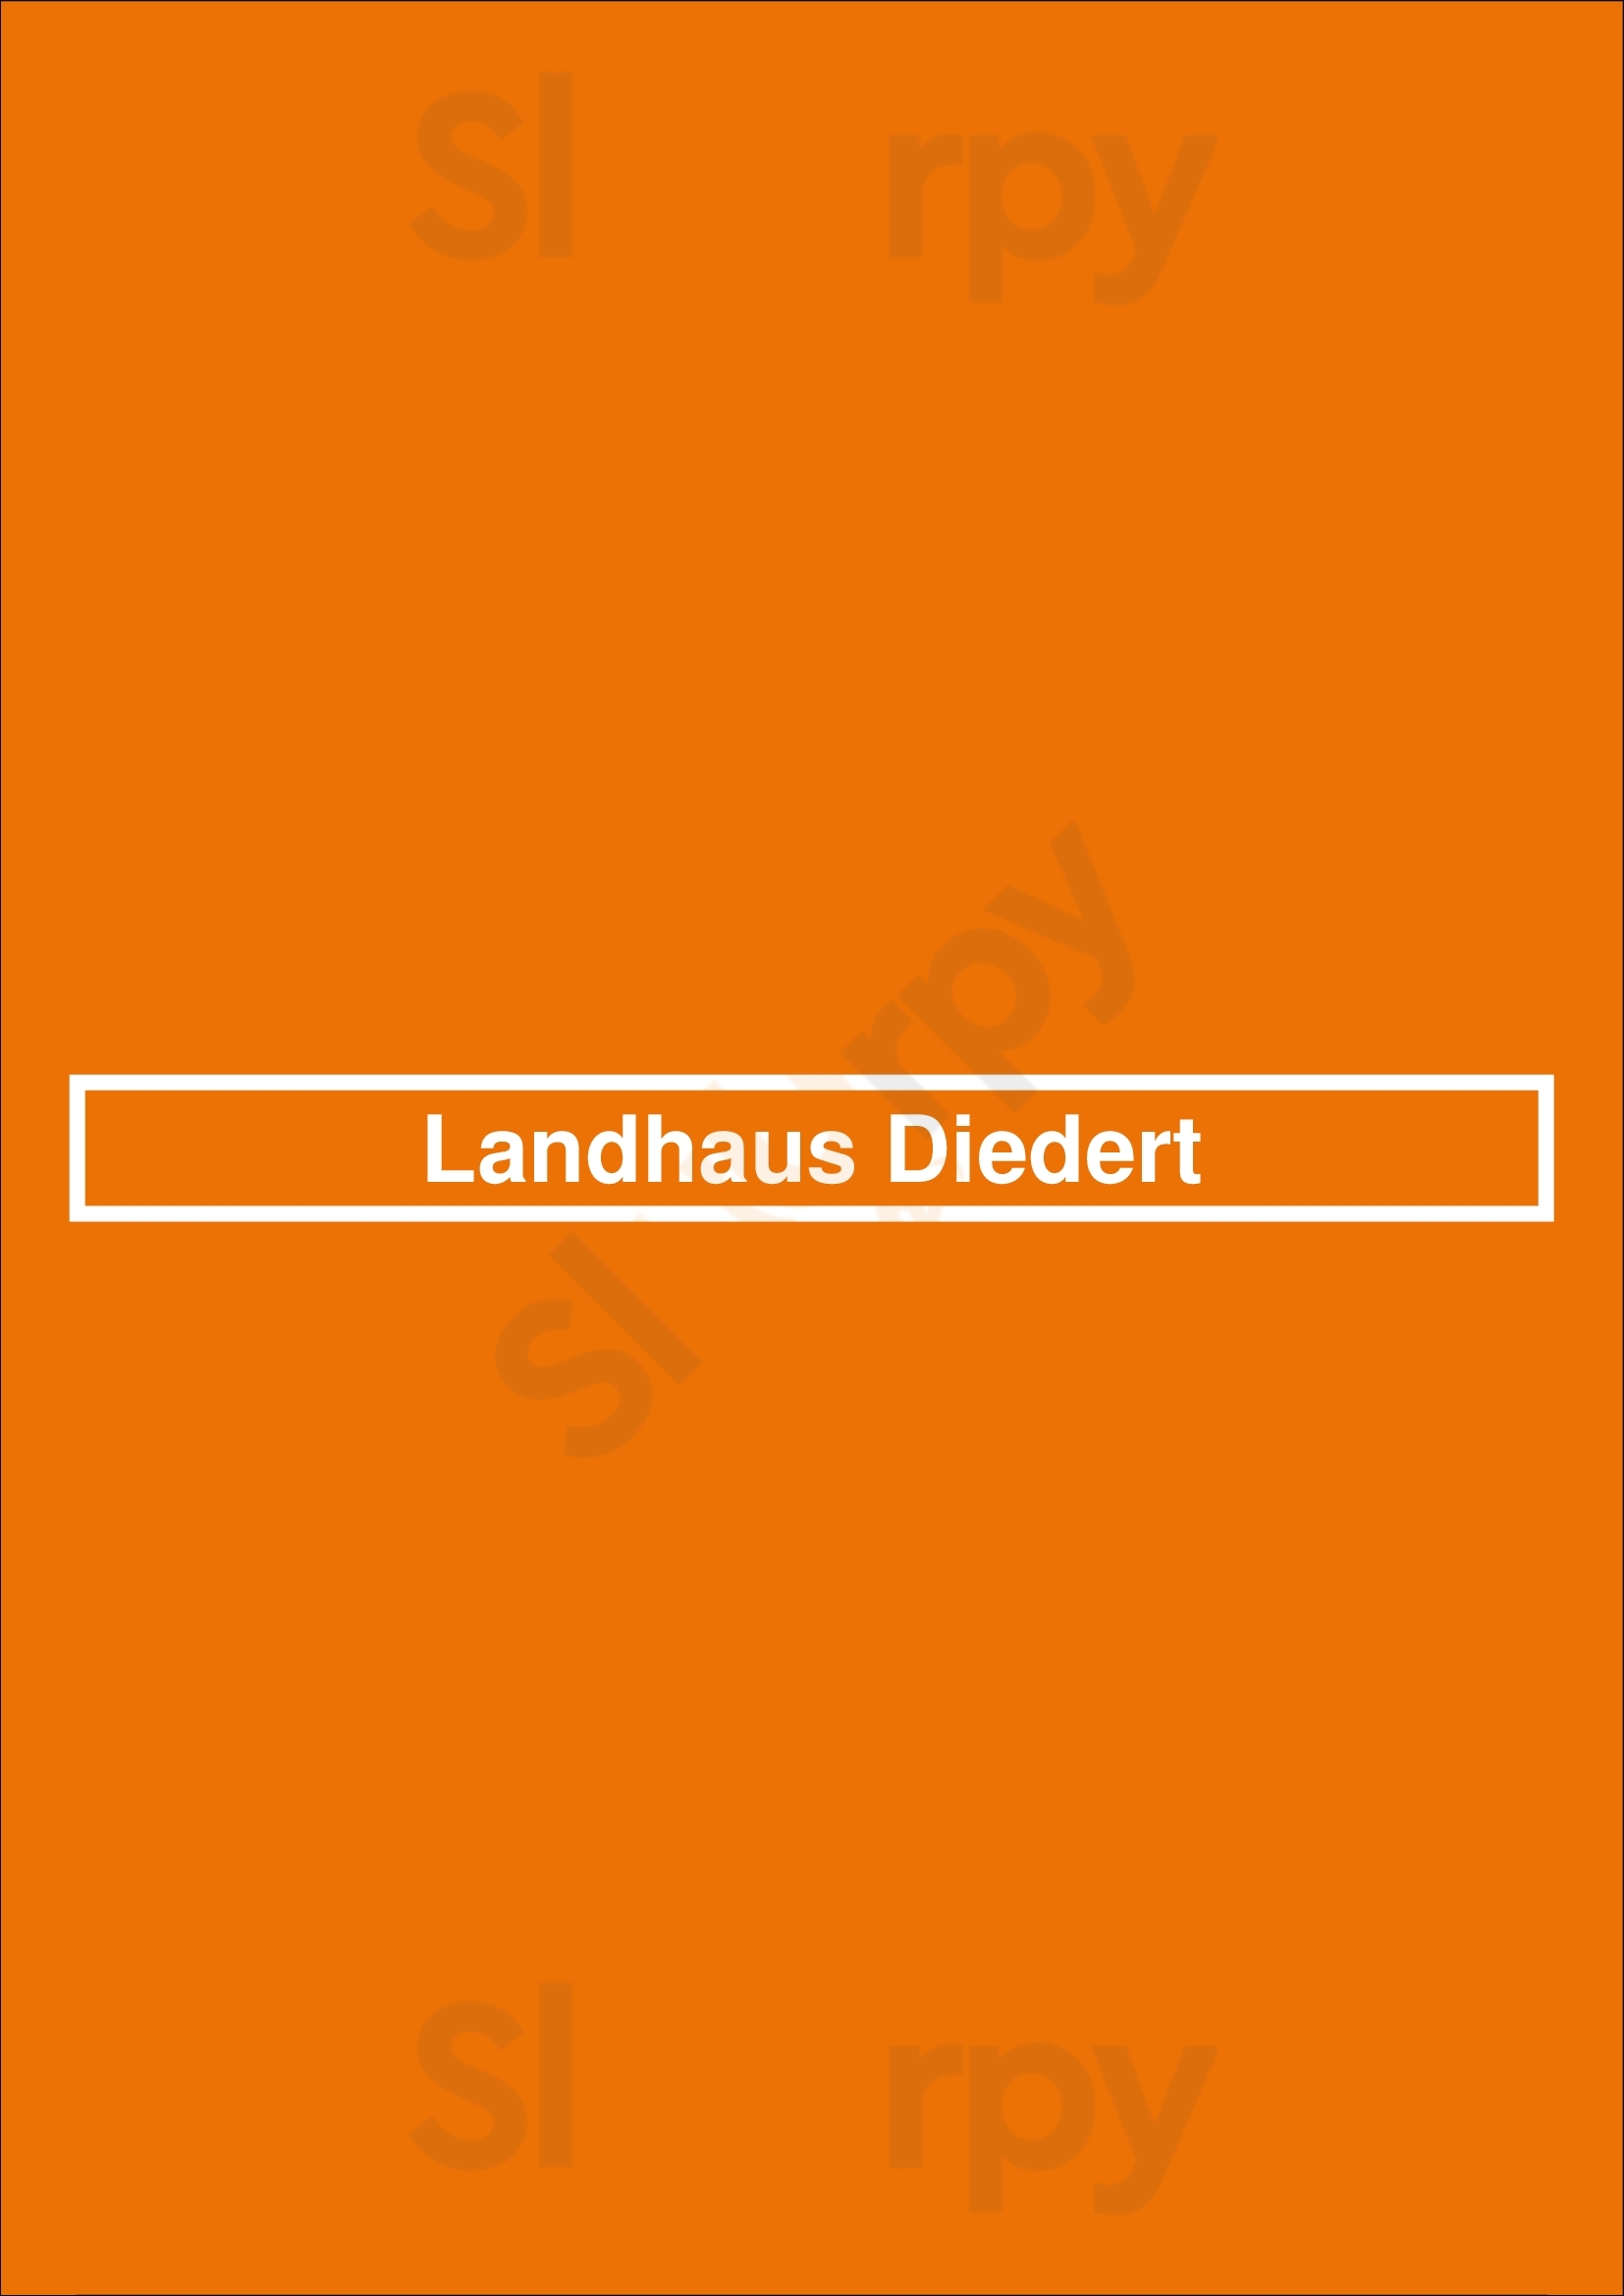 Landhaus Diedert Wiesbaden Menu - 1